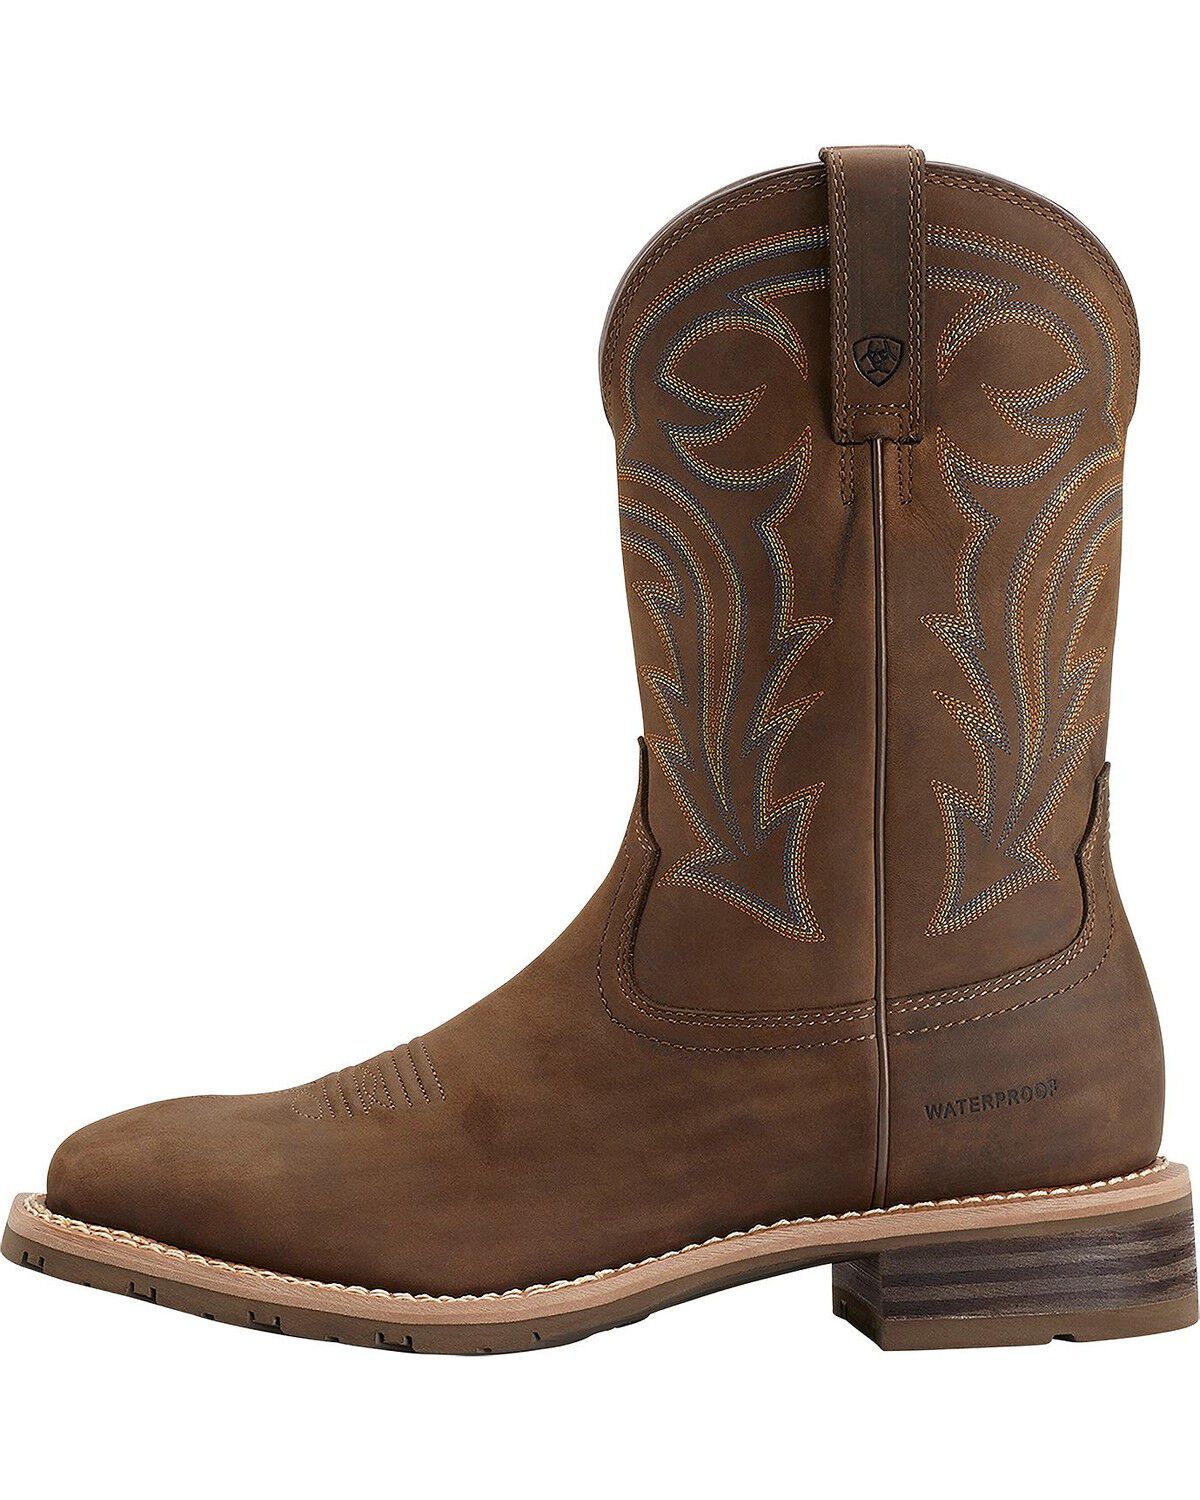 waterproof ranch boots